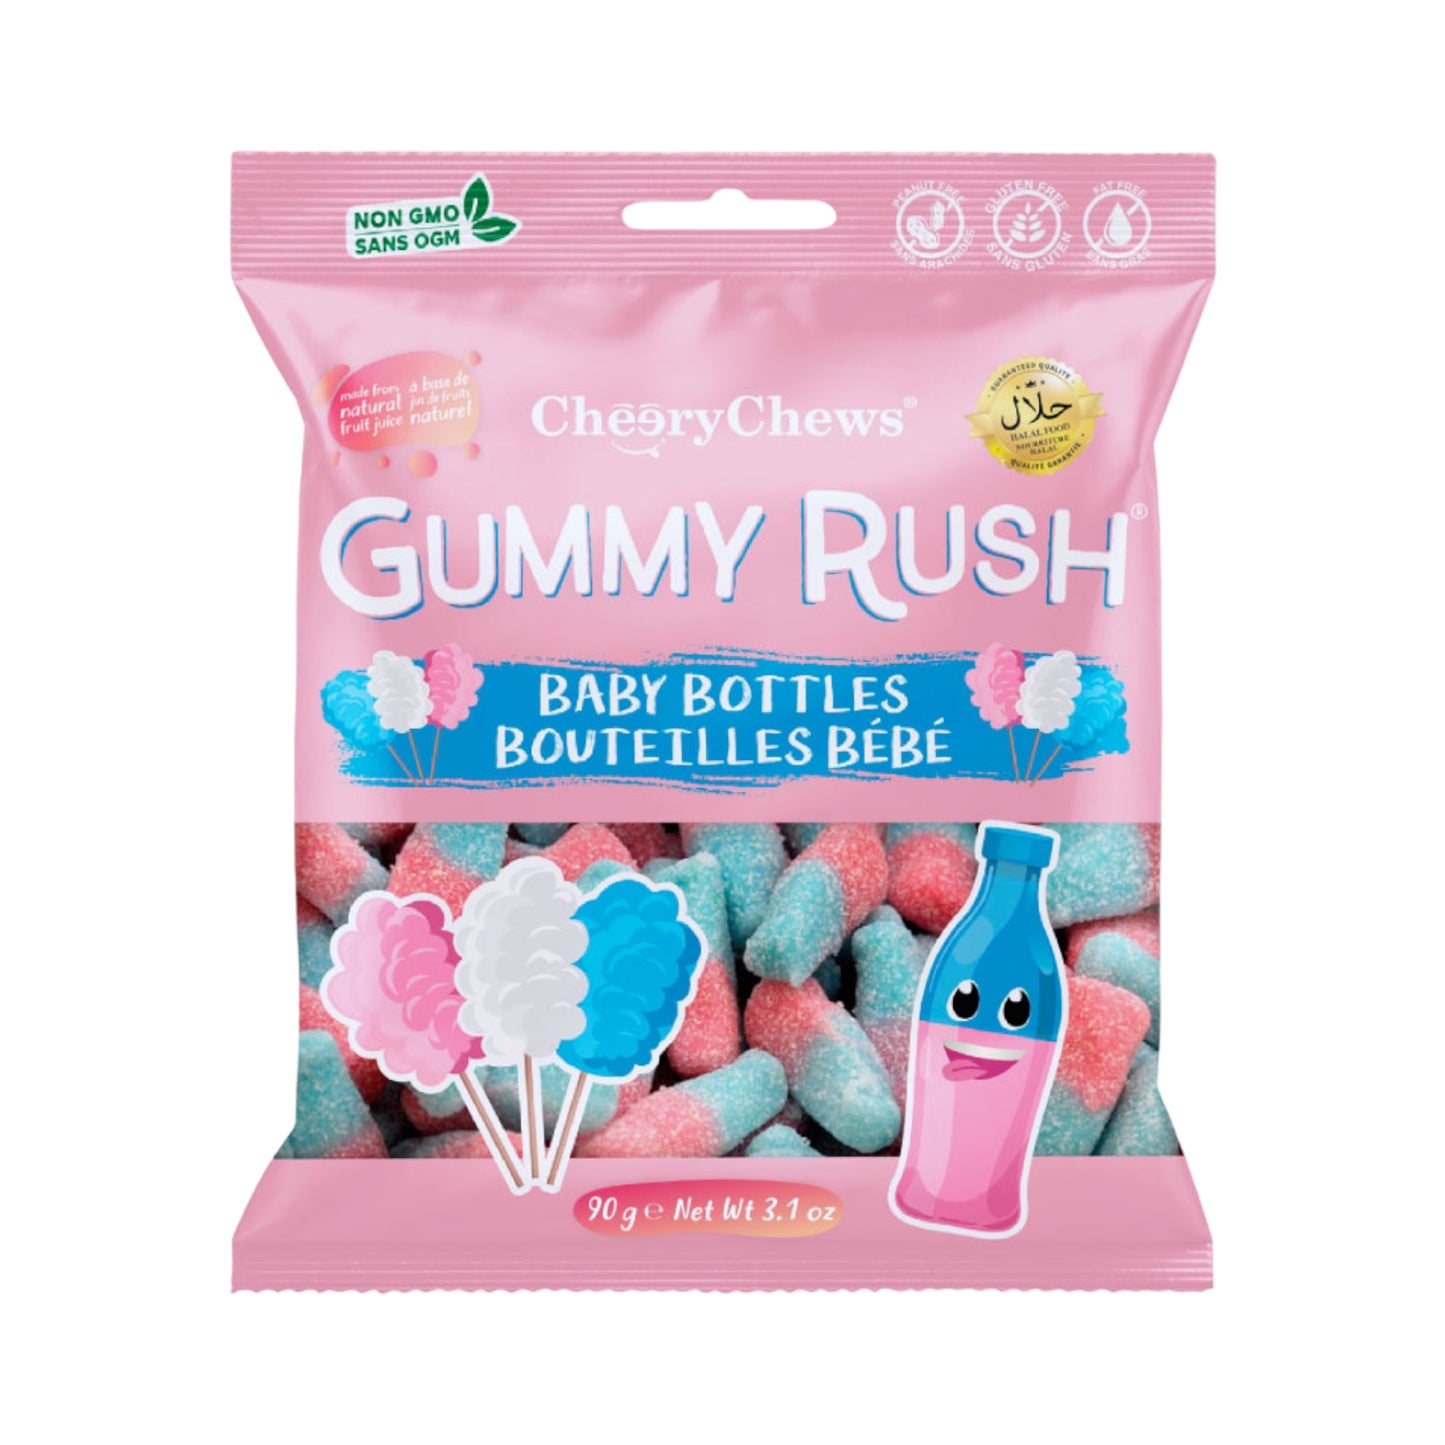 Gummy Rush Baby Bottles - 3.1oz (90g)